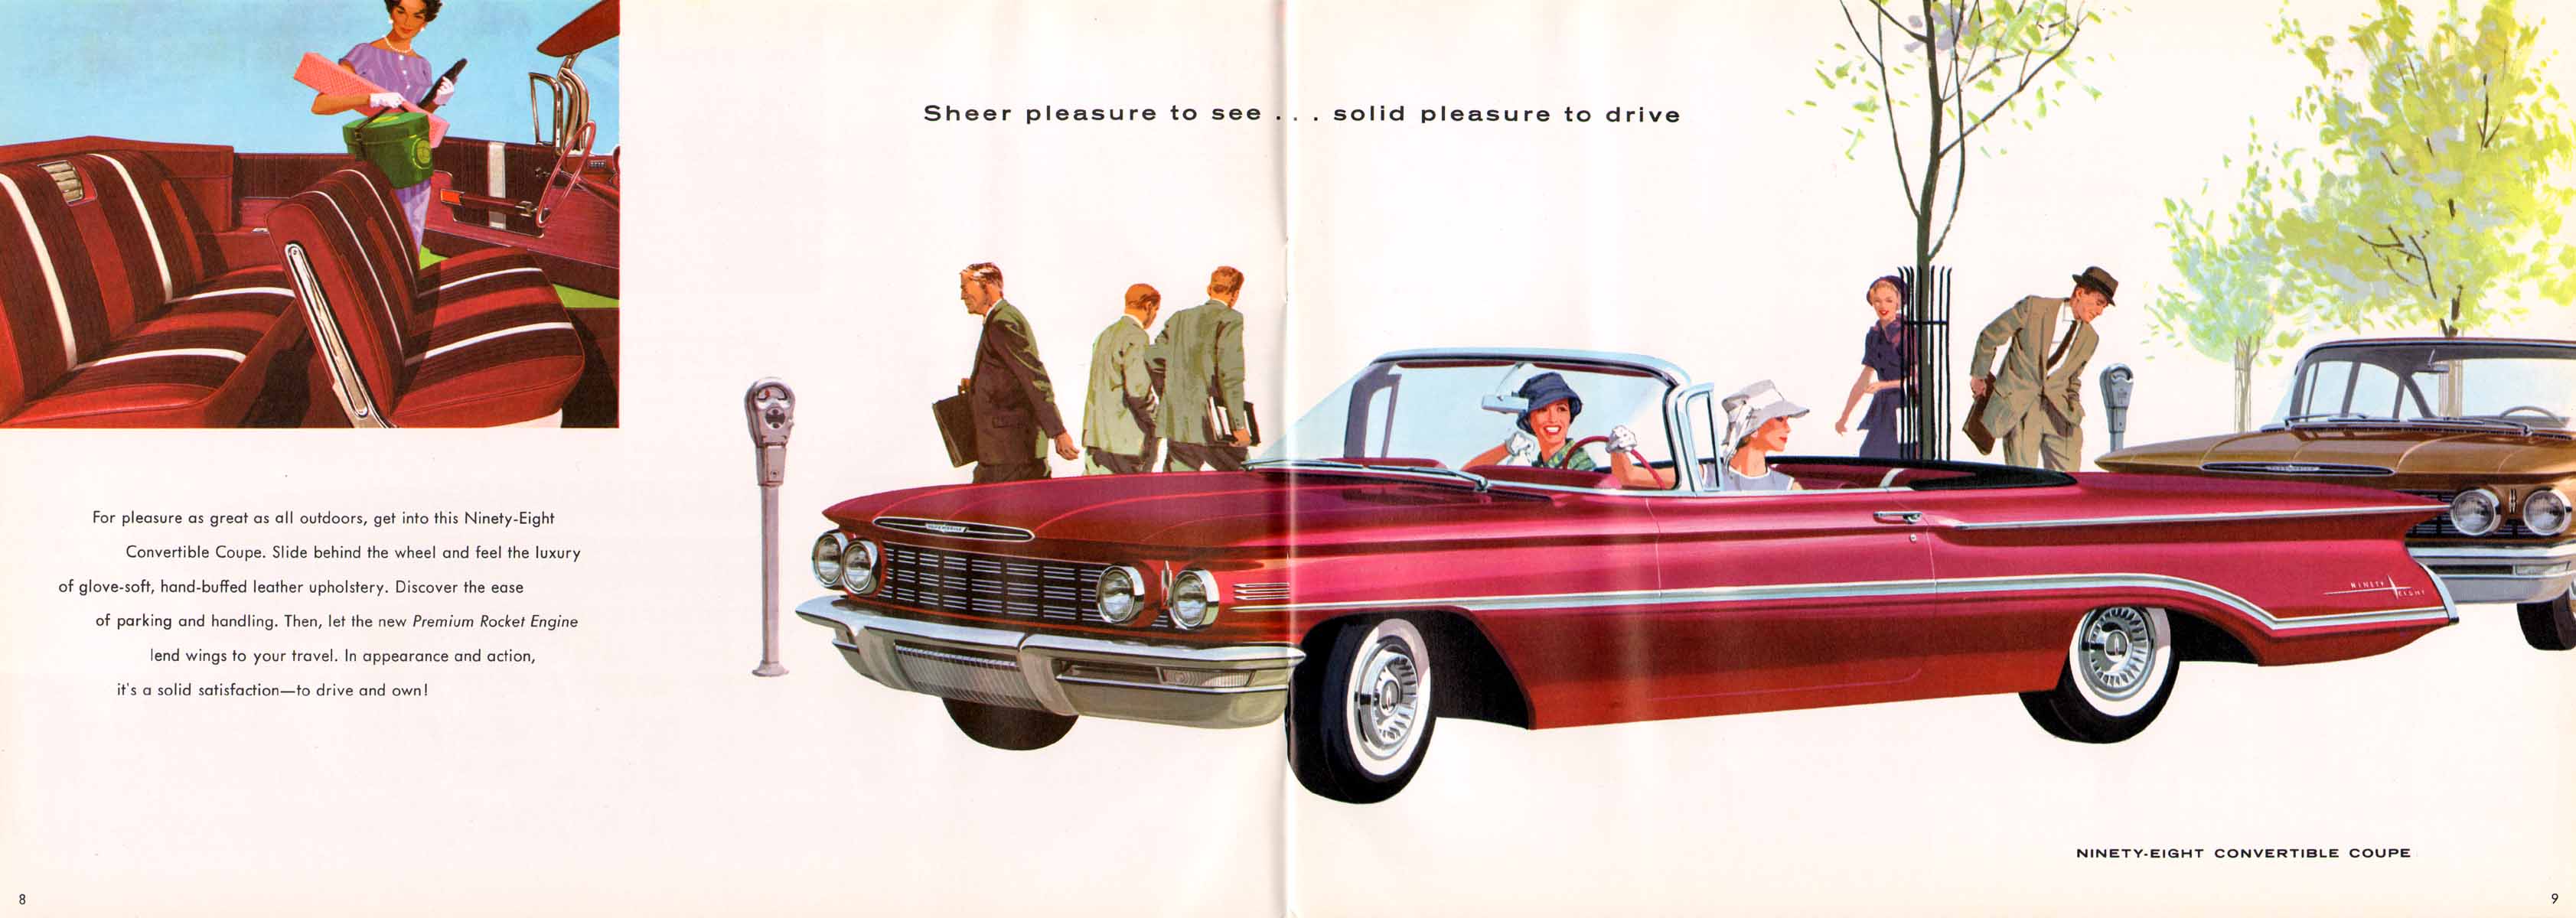 1960 Oldsmobile Motor Cars Brochure Page 4